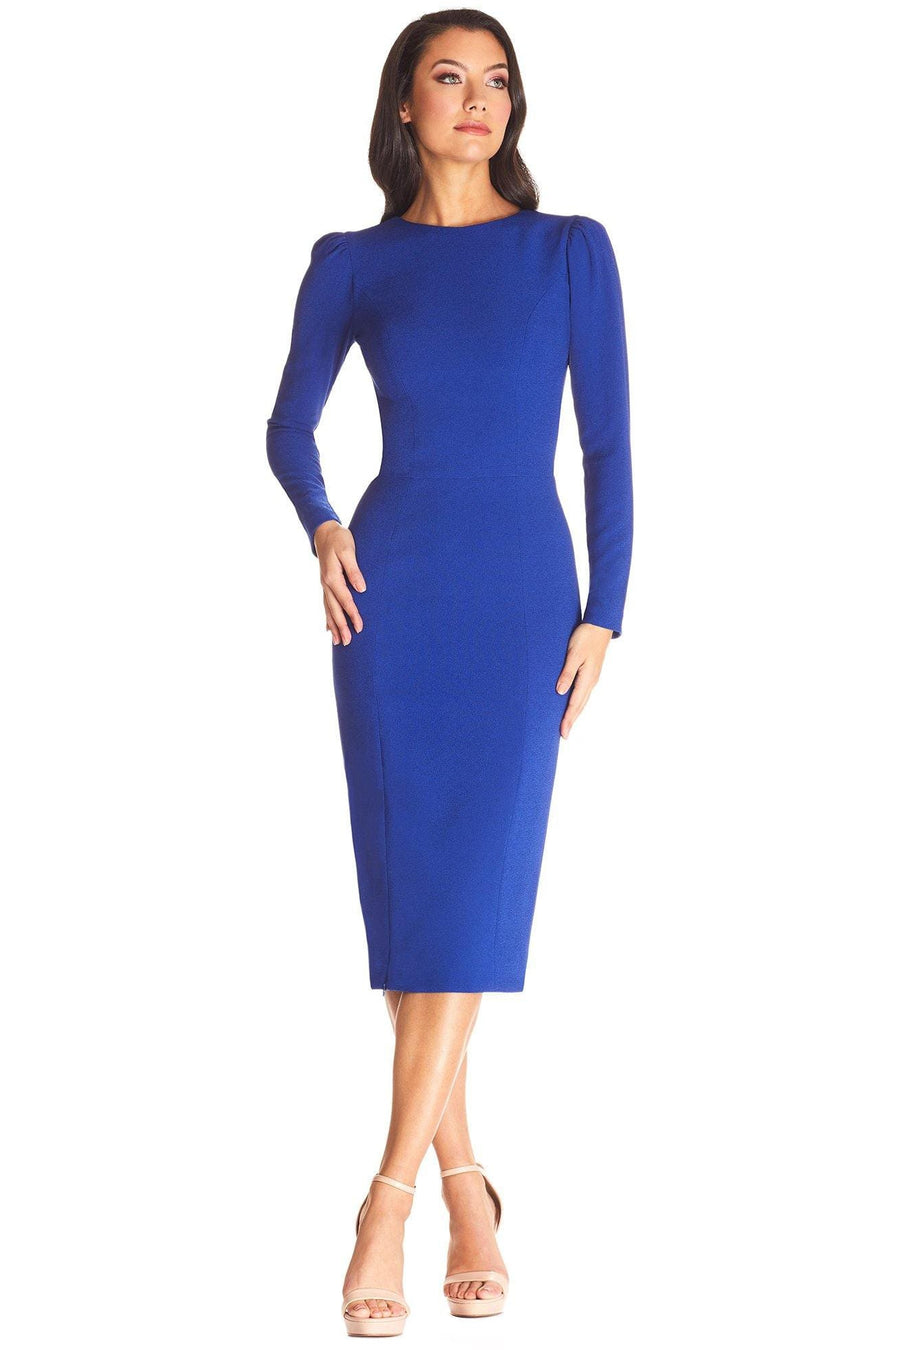 Nadia Long Sleeve Royal Blue Sheath Dress - Dress the Population